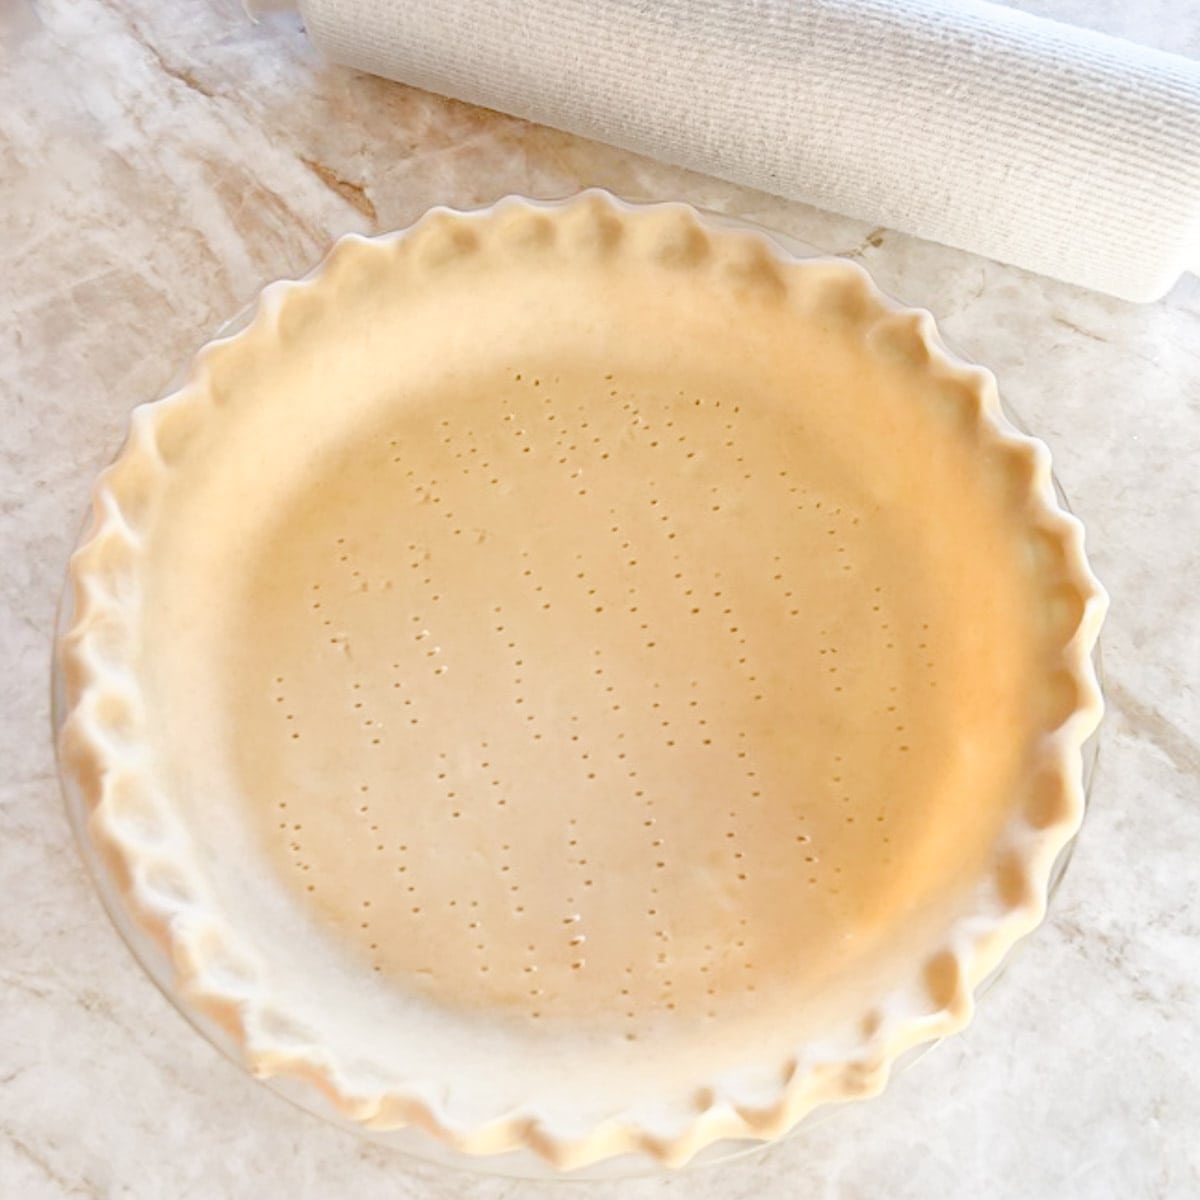 Unbaked pie crust dough in a pie pan